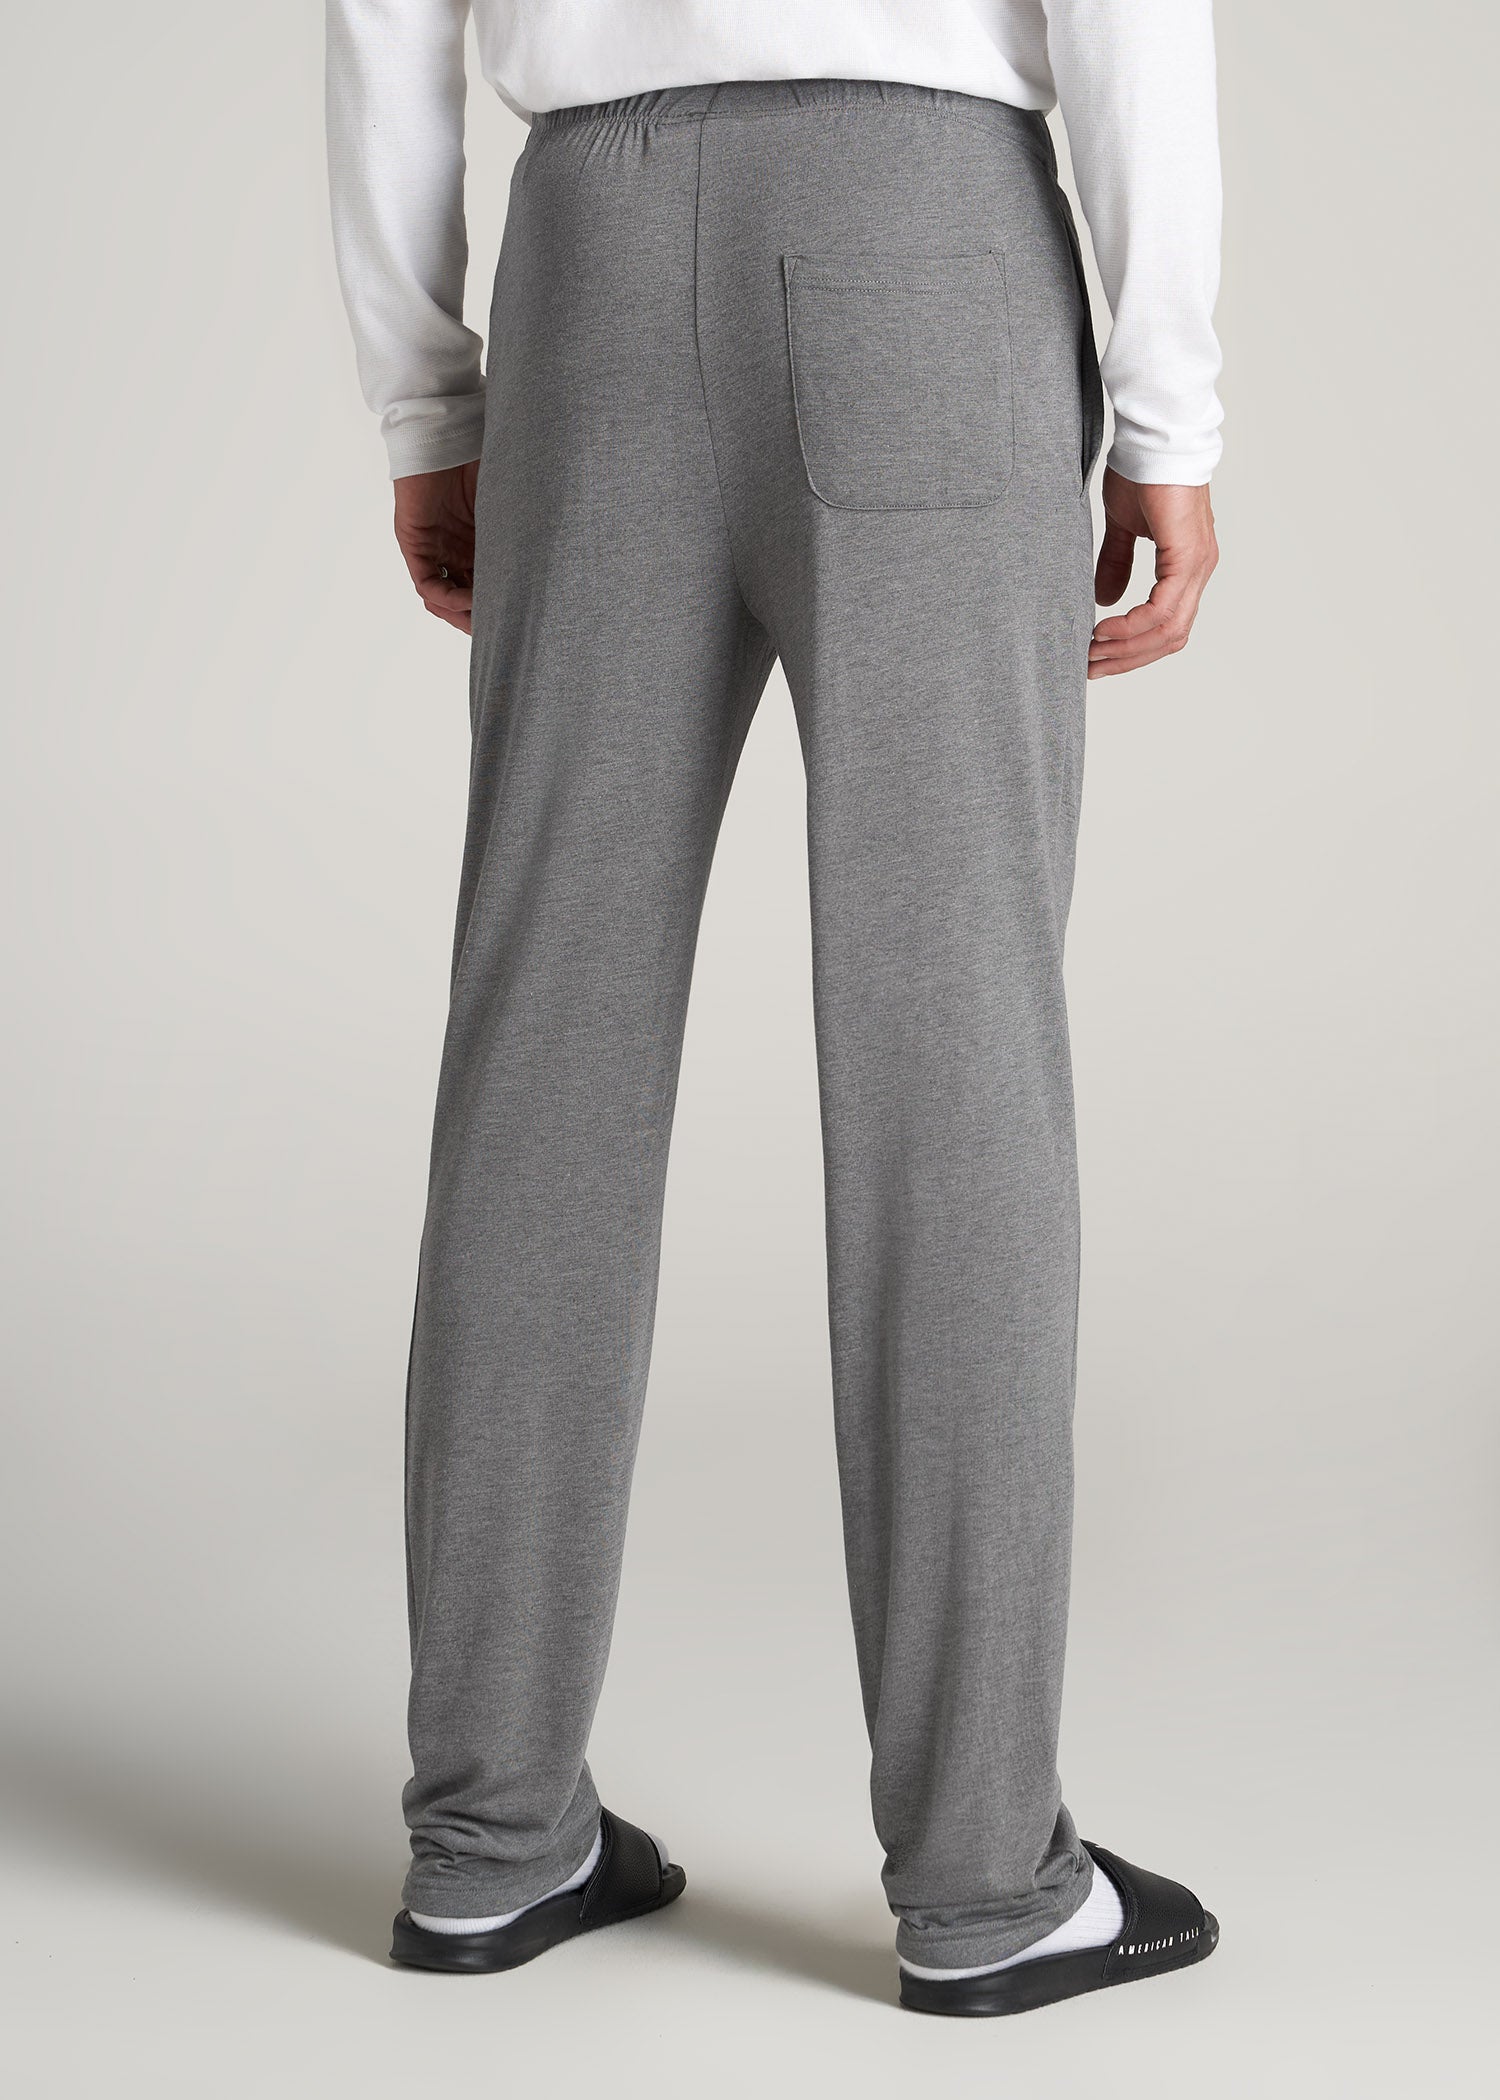 Medium Tall Pajama Pants: Navy Tall Lounge Pant For Men – American Tall